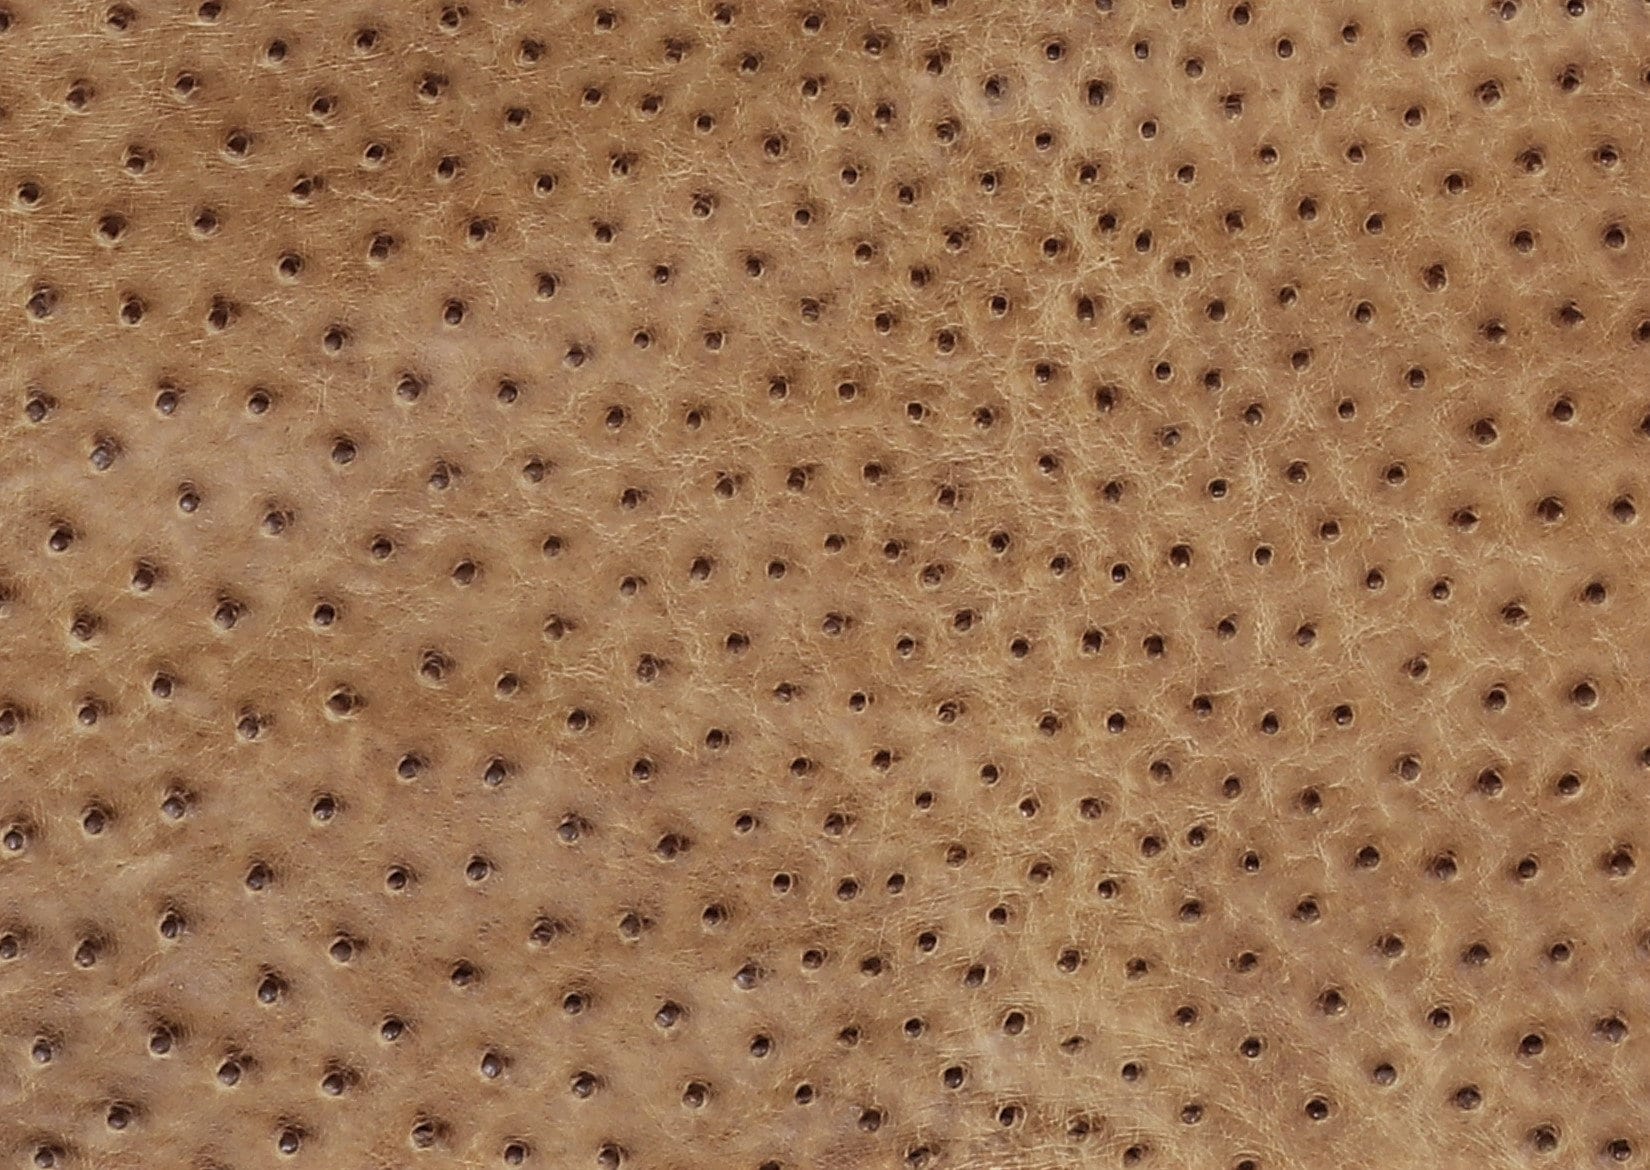 Ostrich Skin Leather Black Color %100 Genuine Natural Skin 